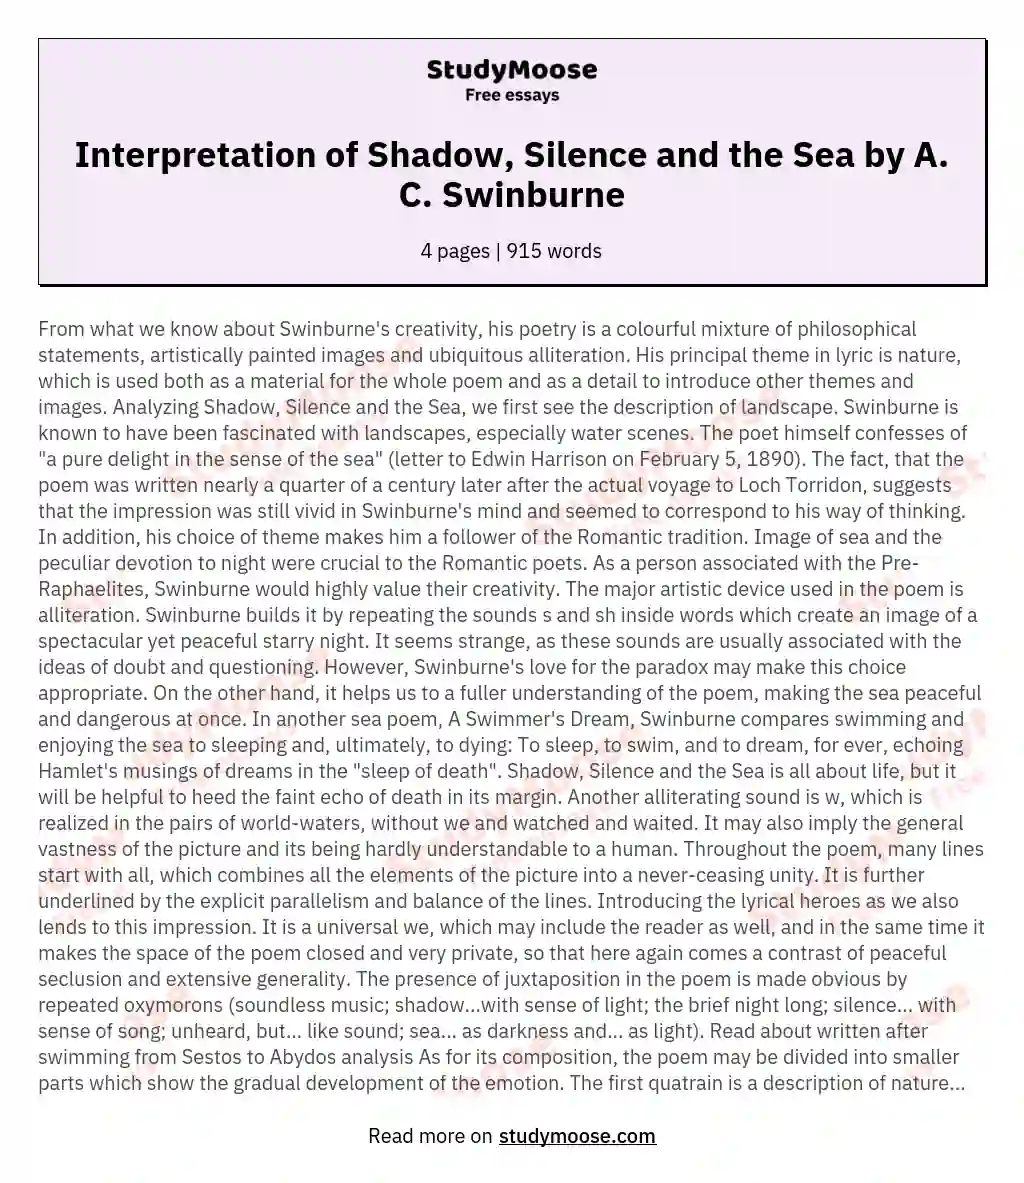 Interpretation of Shadow, Silence and the Sea by A. C. Swinburne essay